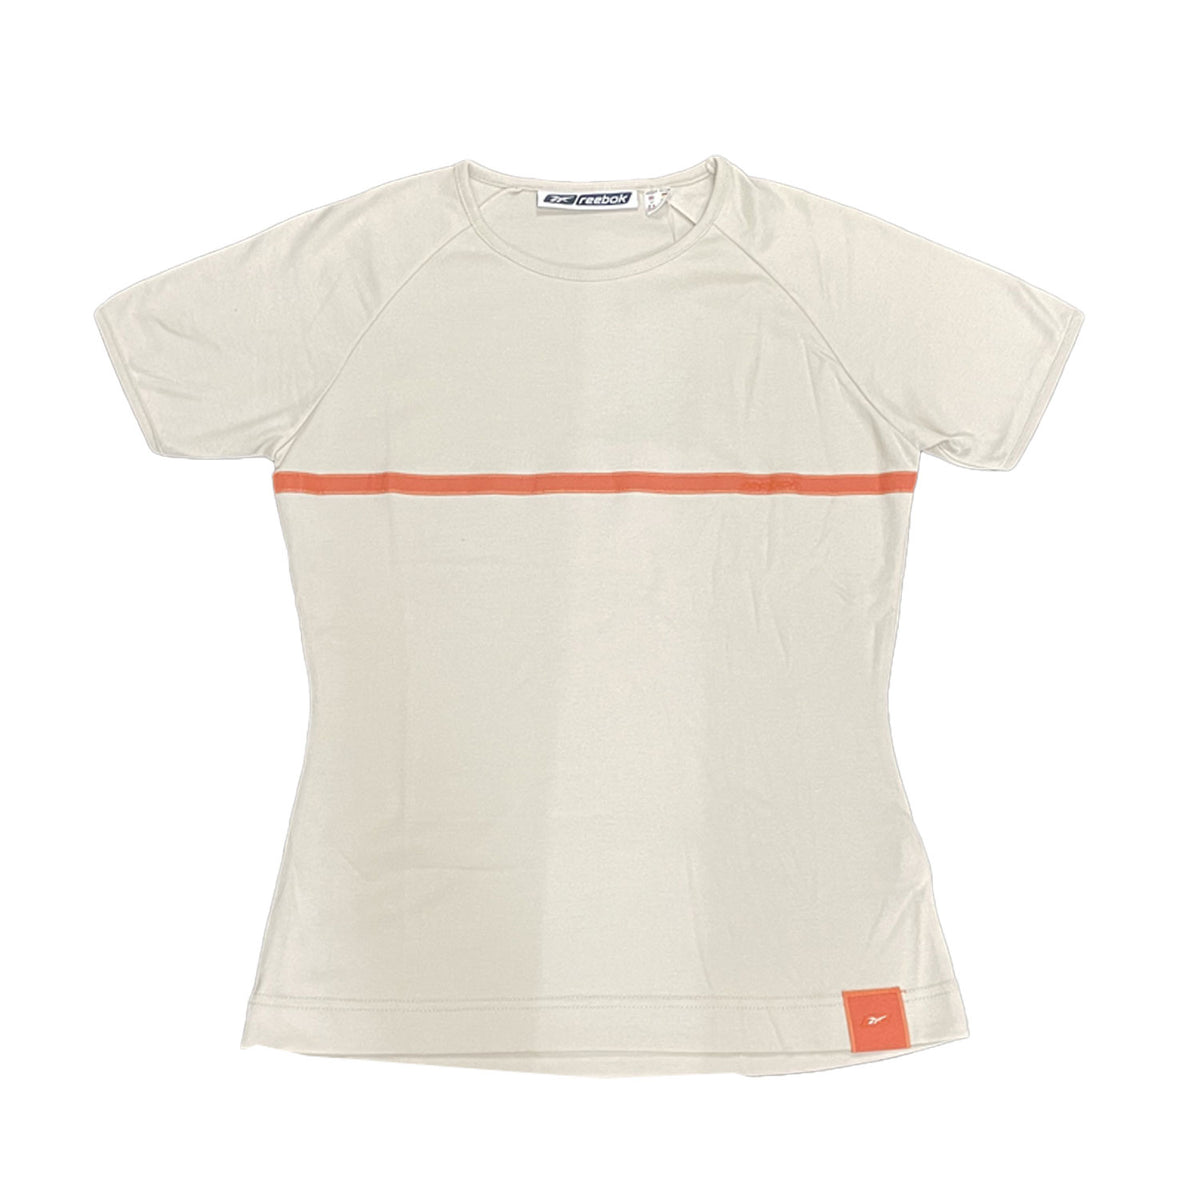 Reebok Womens Lined Classic T-Shirt - Cream - UK Size 12